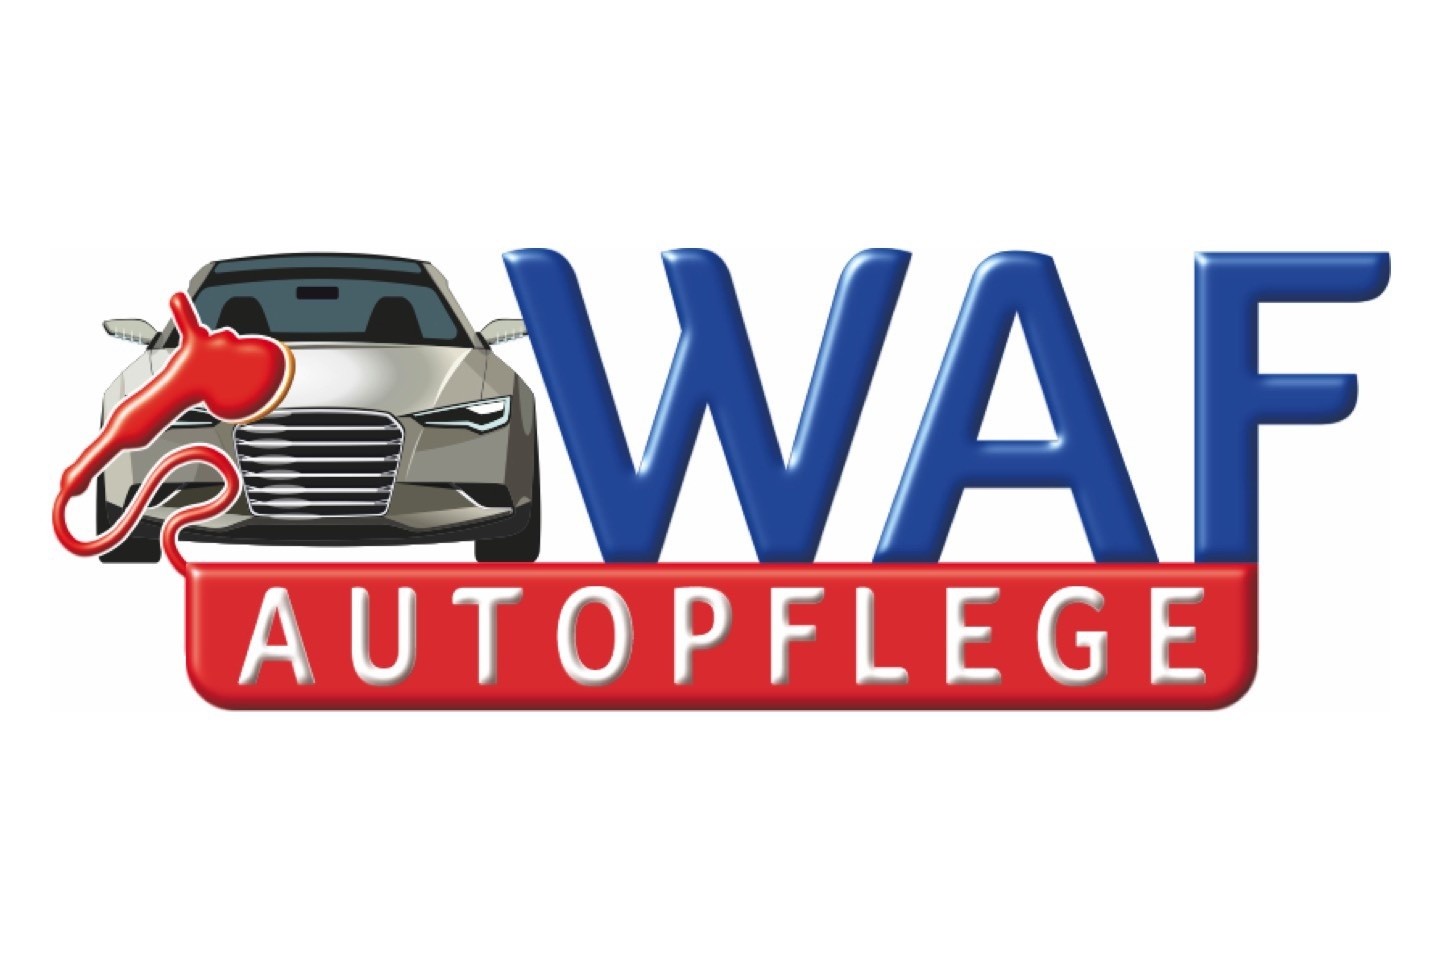 Autopflege WAF, Dein WAF